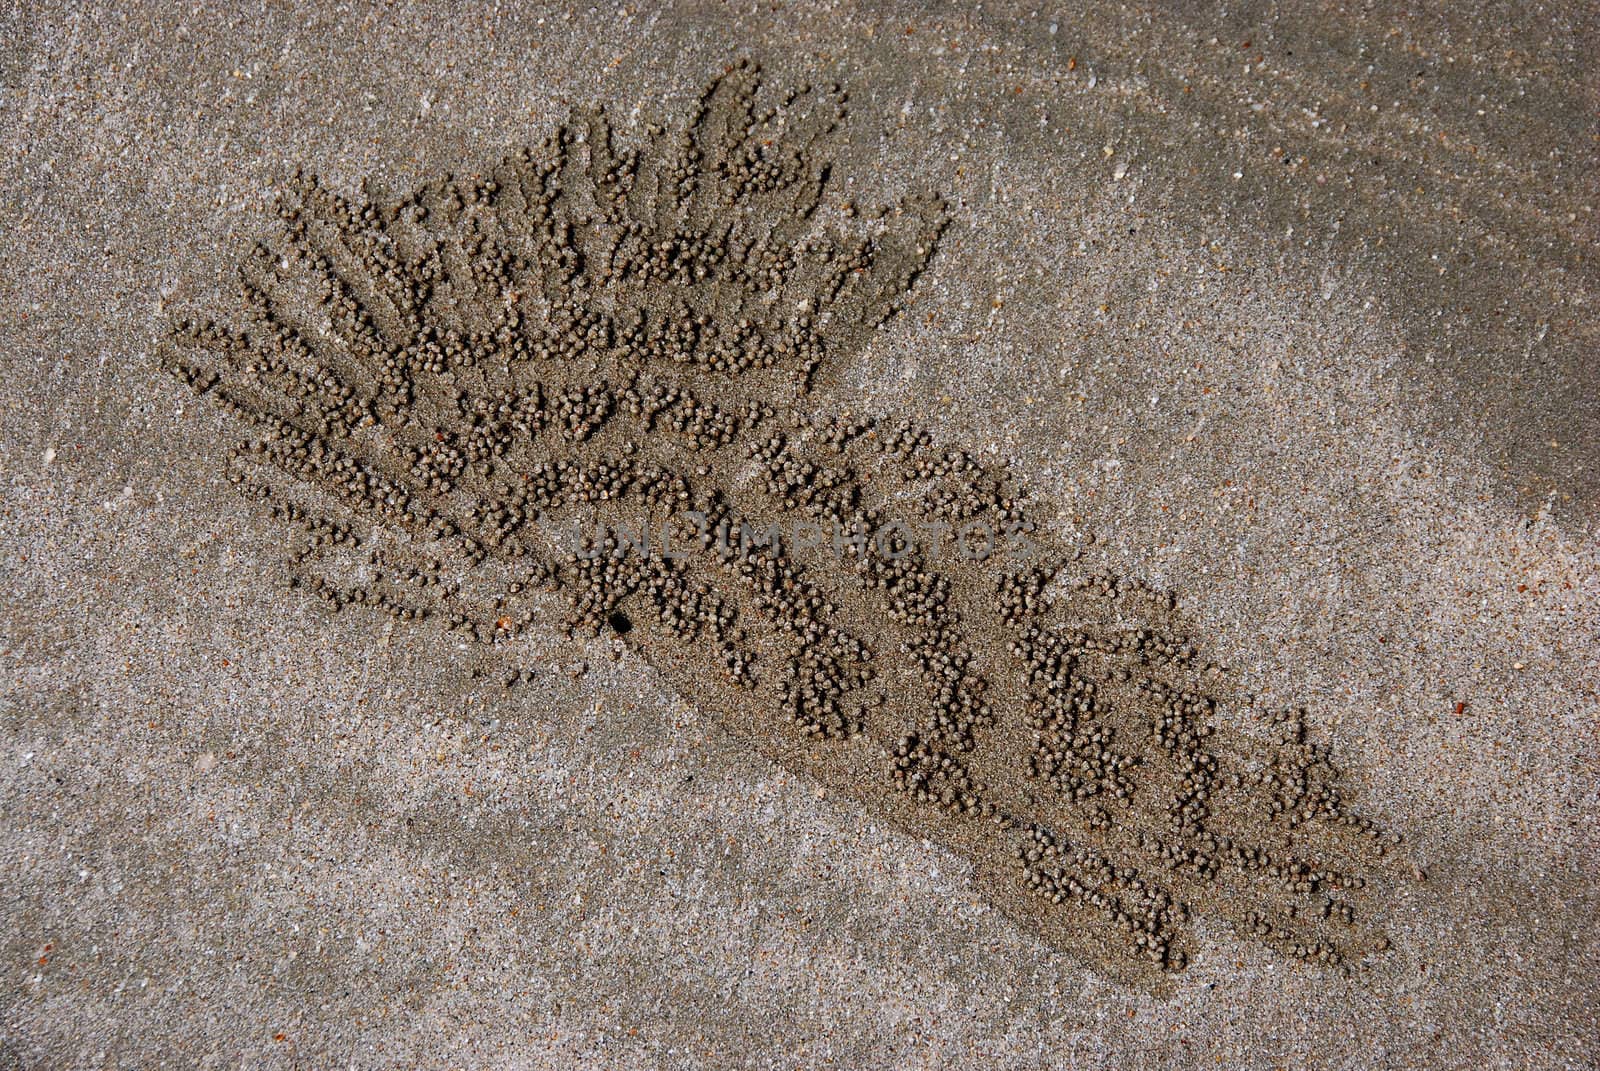 Sand crab on a beach